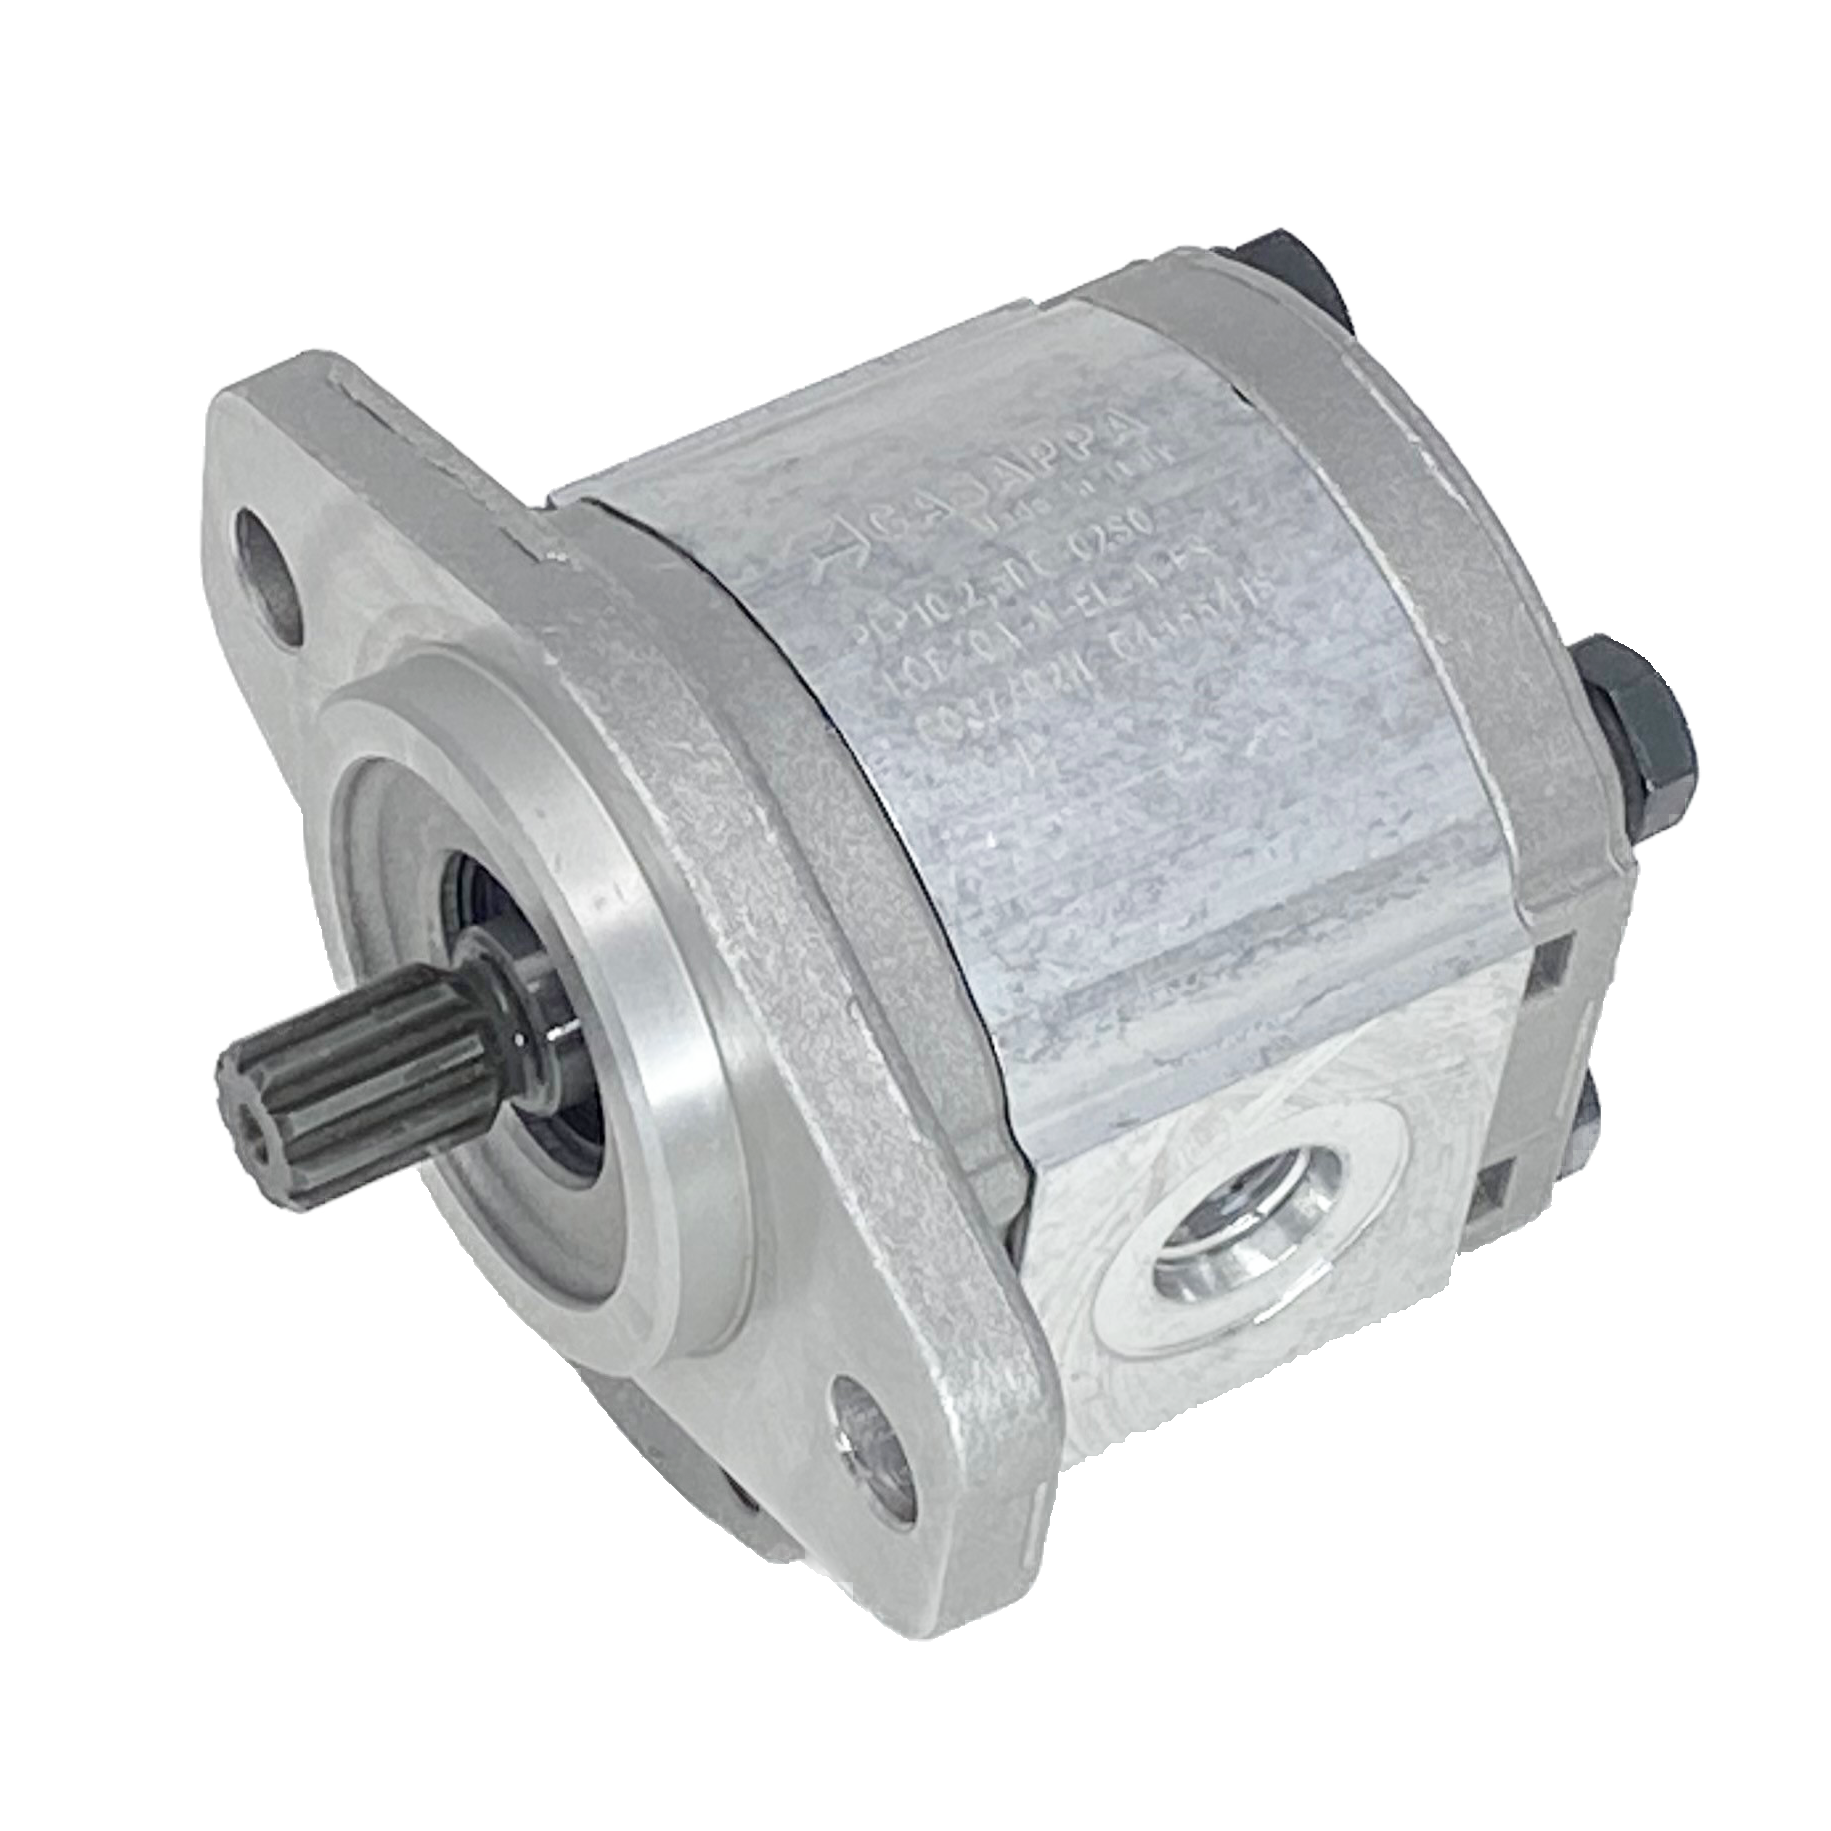 PLP10.3,15D0-02S0-LOB/OA-N-EL : Casappa Polaris Gear Pump, 3.34cc, 3770psi Rated, 4000RPM, CW, 9T 20/40dp Shaft, SAE AA 2-Bolt Flange, 0.5 (1/2") #8 SAE Inlet, 0.375 (3/8") #6 SAE Outlet, Aluminum Body & Flange